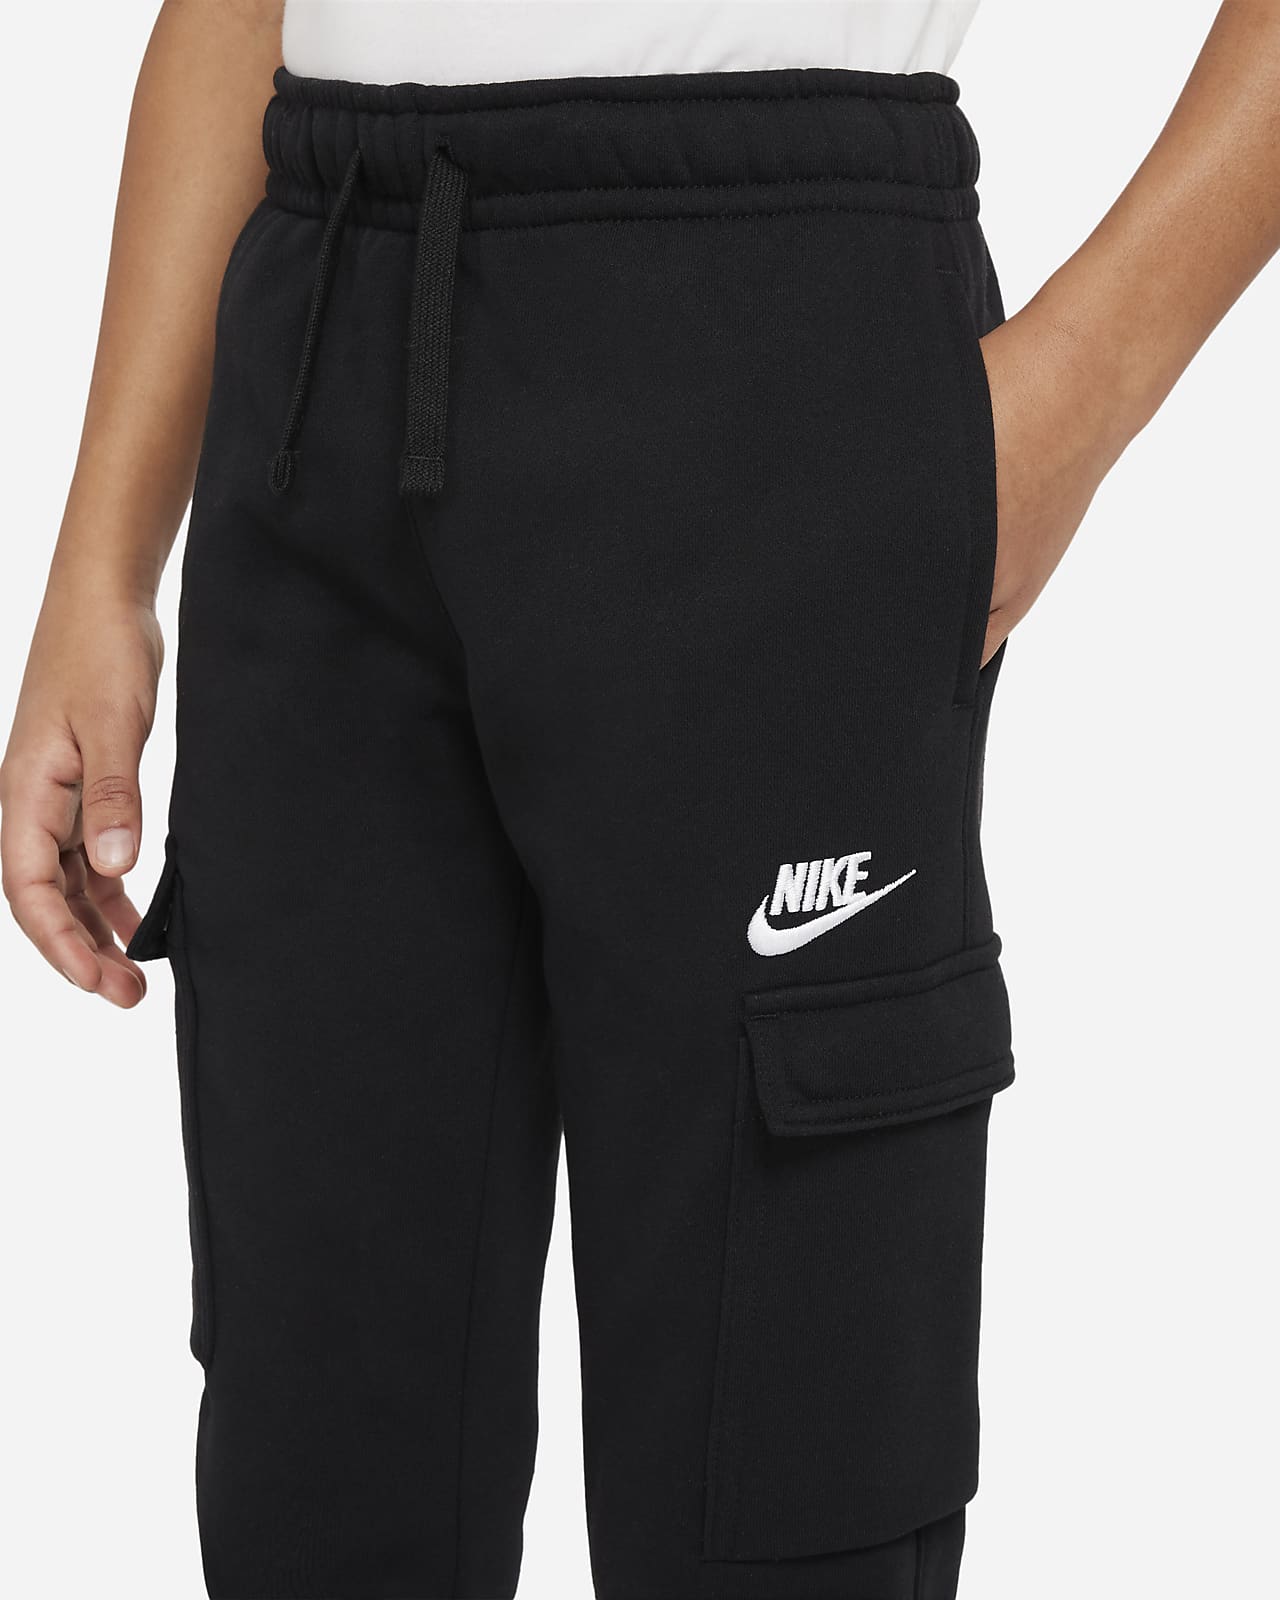 Nike Little Boys Colorblocked AnkleZip Track Pants  Reviews  Leggings   Pants  Kids  Macys